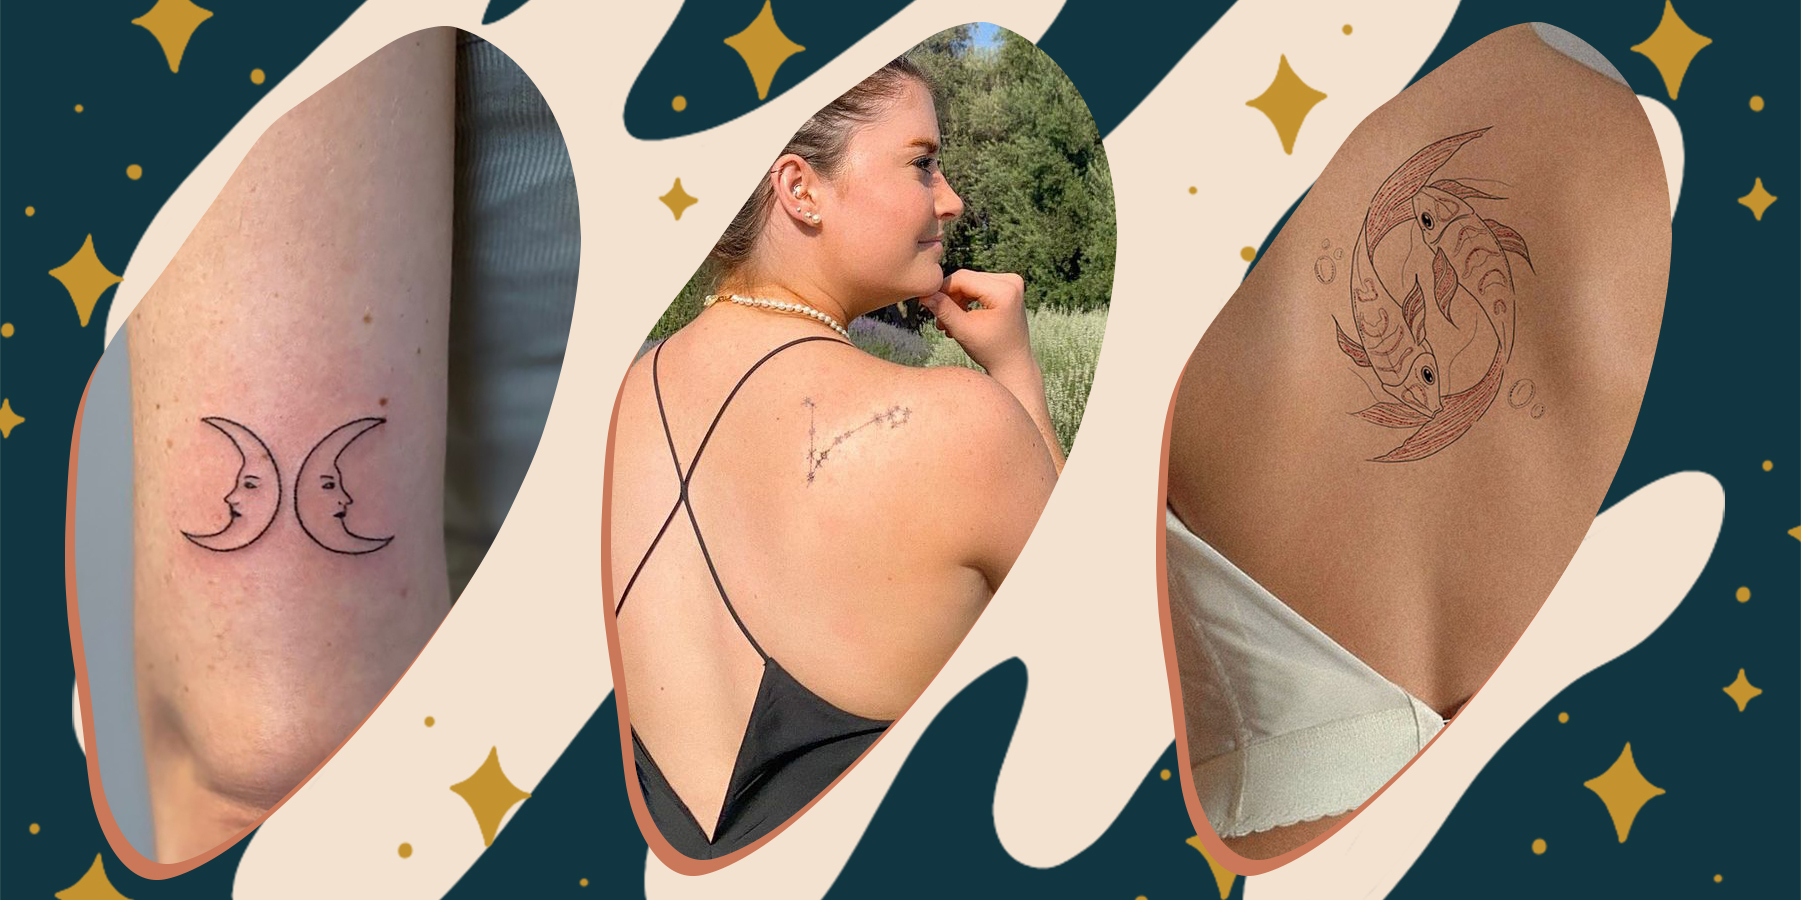 Voorkoms pisces zodiac sign horoscope Temporary Body Tattoo Waterproof For  Girls Men Women Beautiful & Popular Water Transfer Size 11CM x 6CM - 1Pcs :  Amazon.in: Beauty